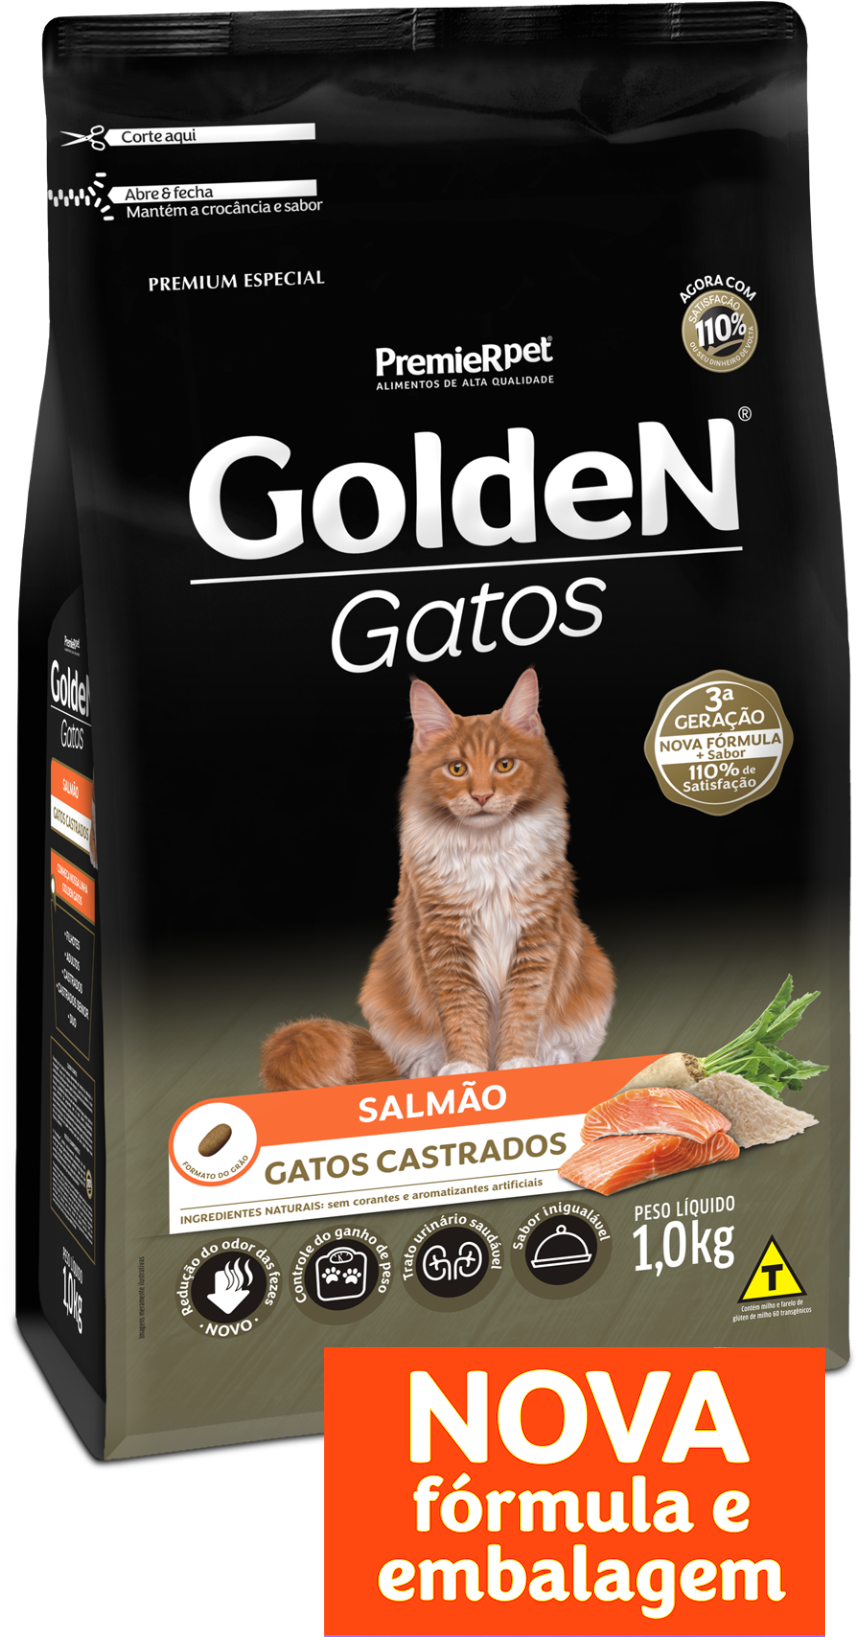 Golden Gatos Cat Food Package Salmon Flavor PNG